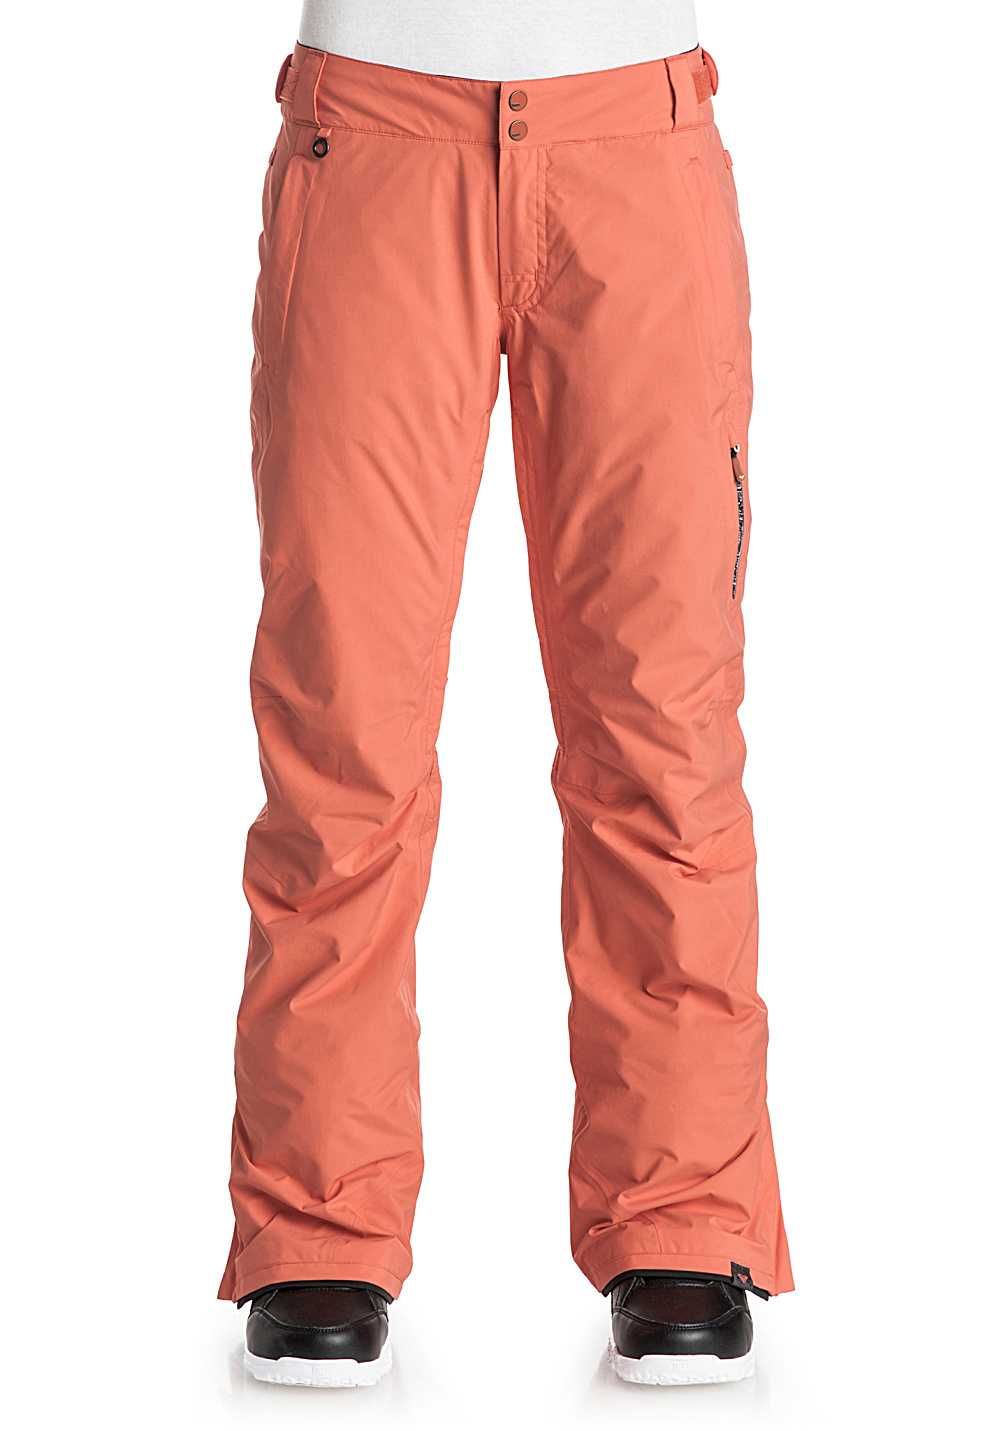 Nowe spodnie Roxy Gore-TEX Rushmore S burton volcom picture dc dope